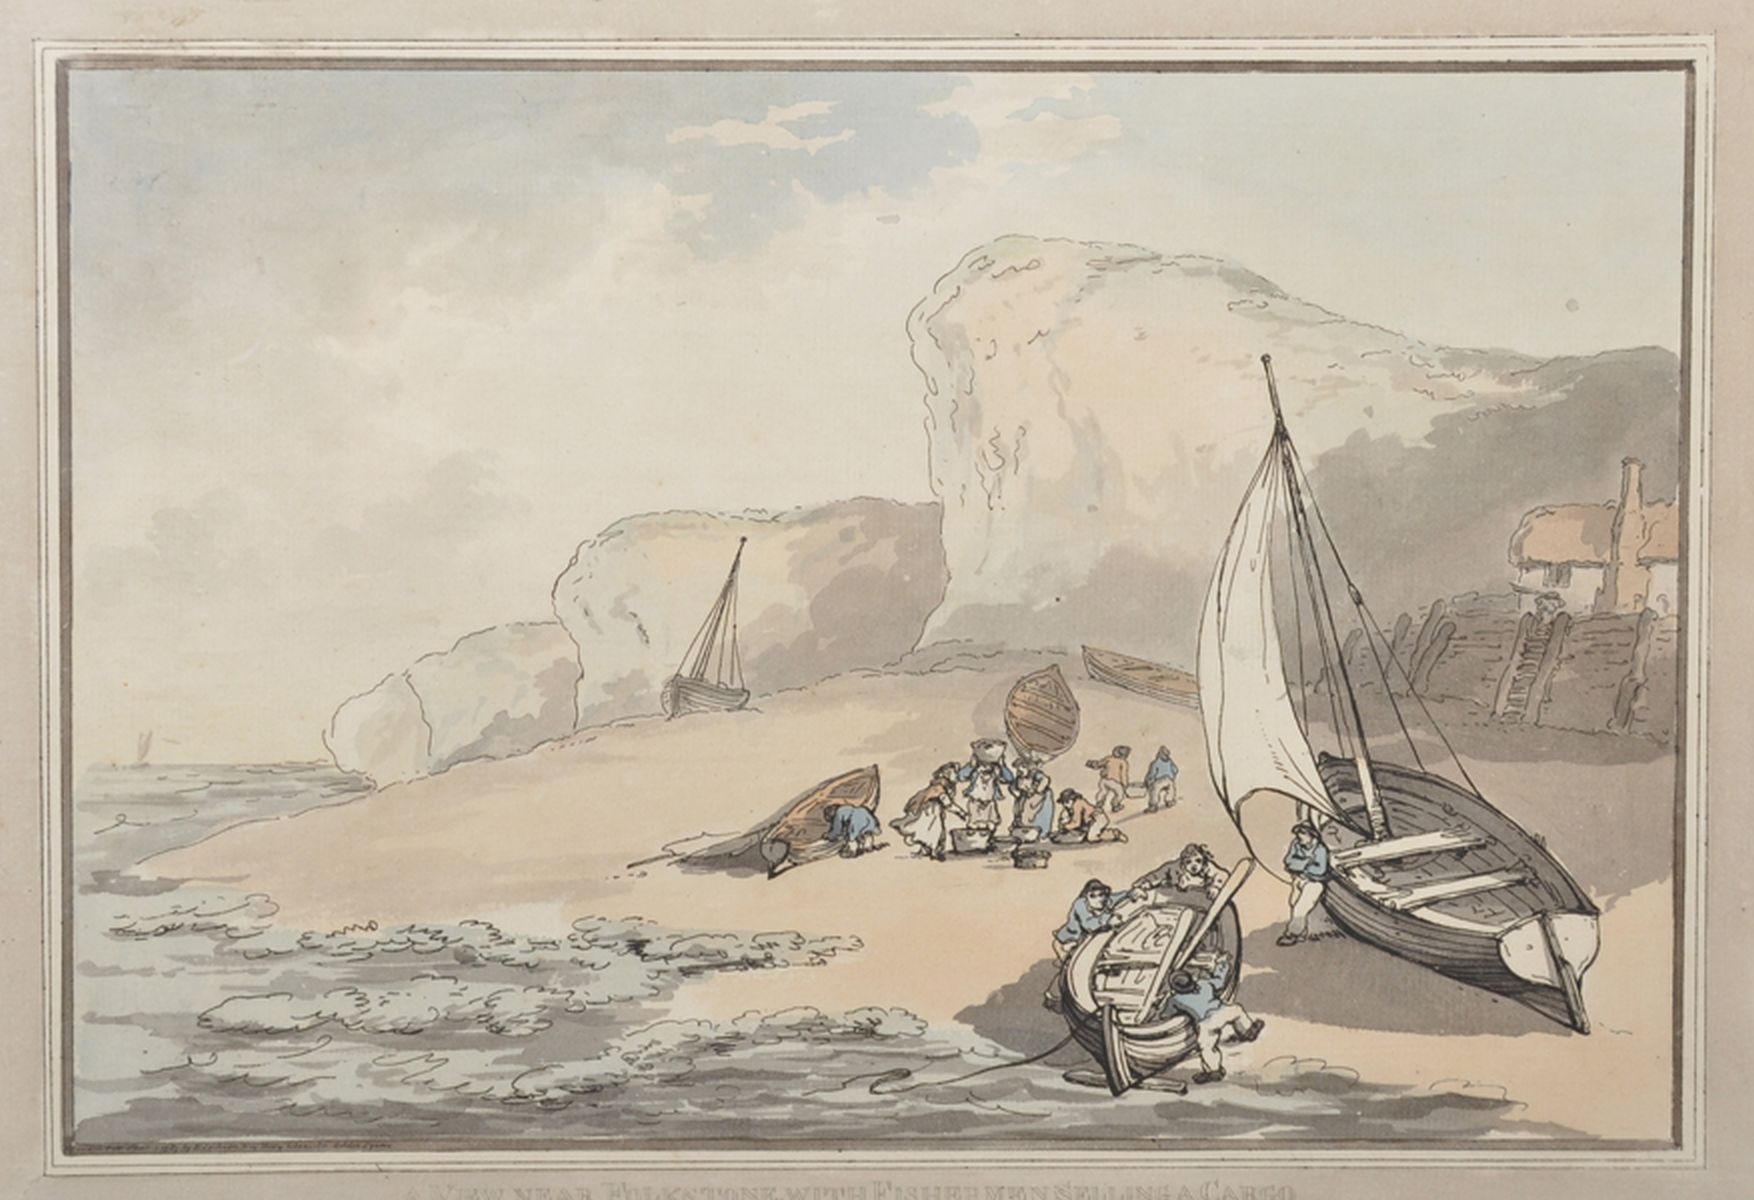 Thomas Rowlandson (1756-1827) British. "A View Near Folkestone with Fishermen Selling a Cargo",